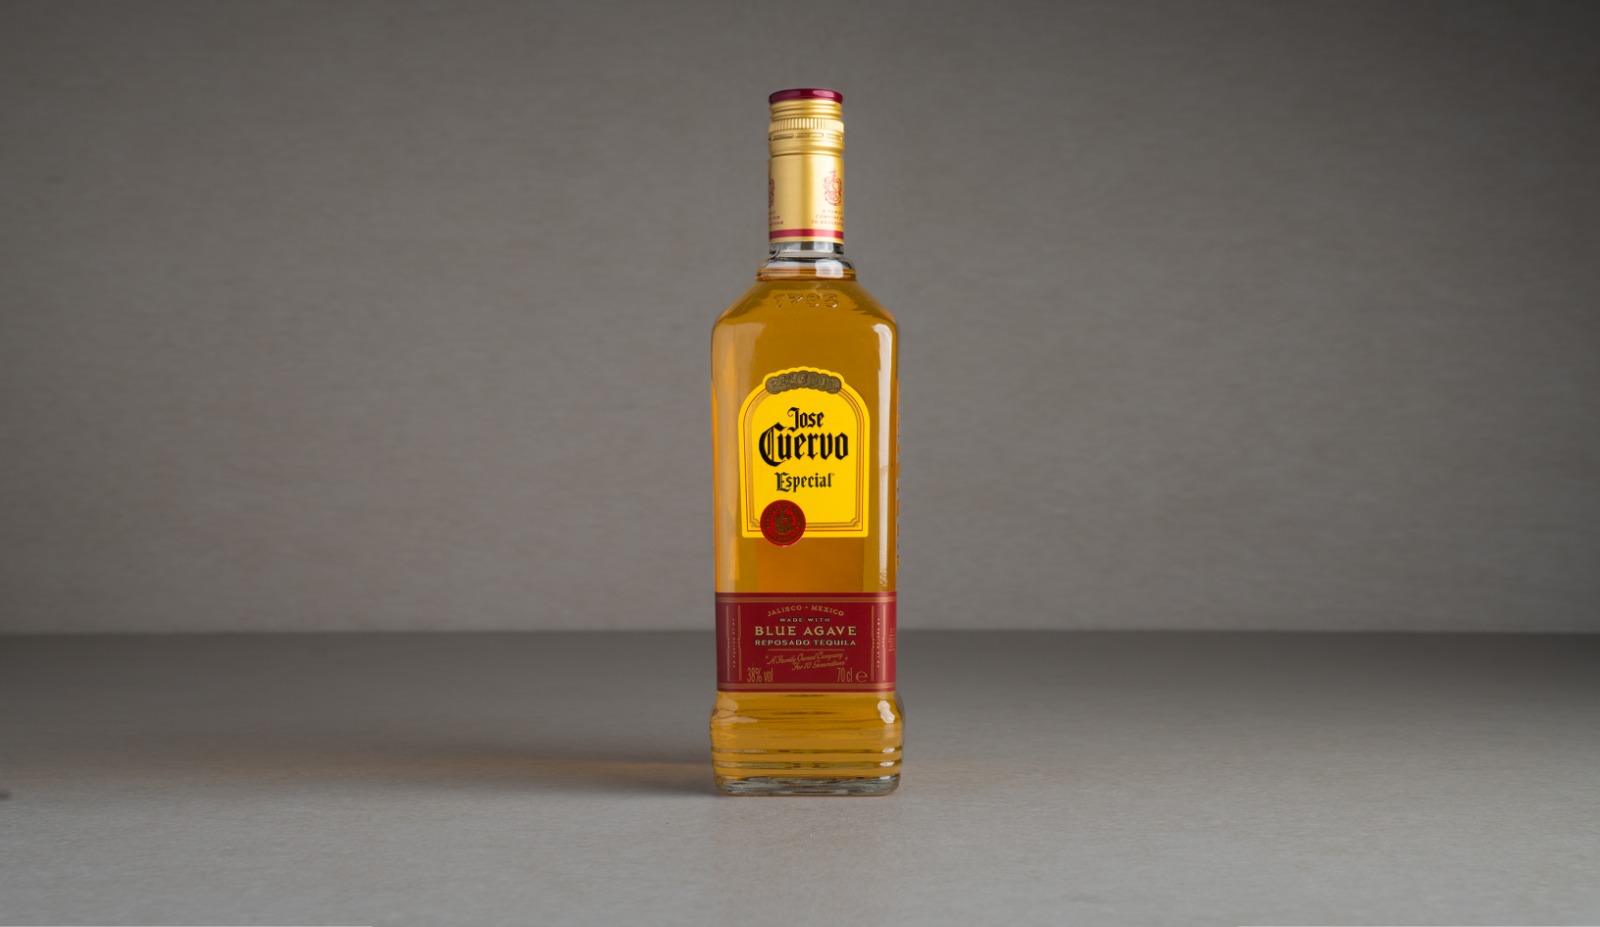 Jose Cuervo Gold Tequila